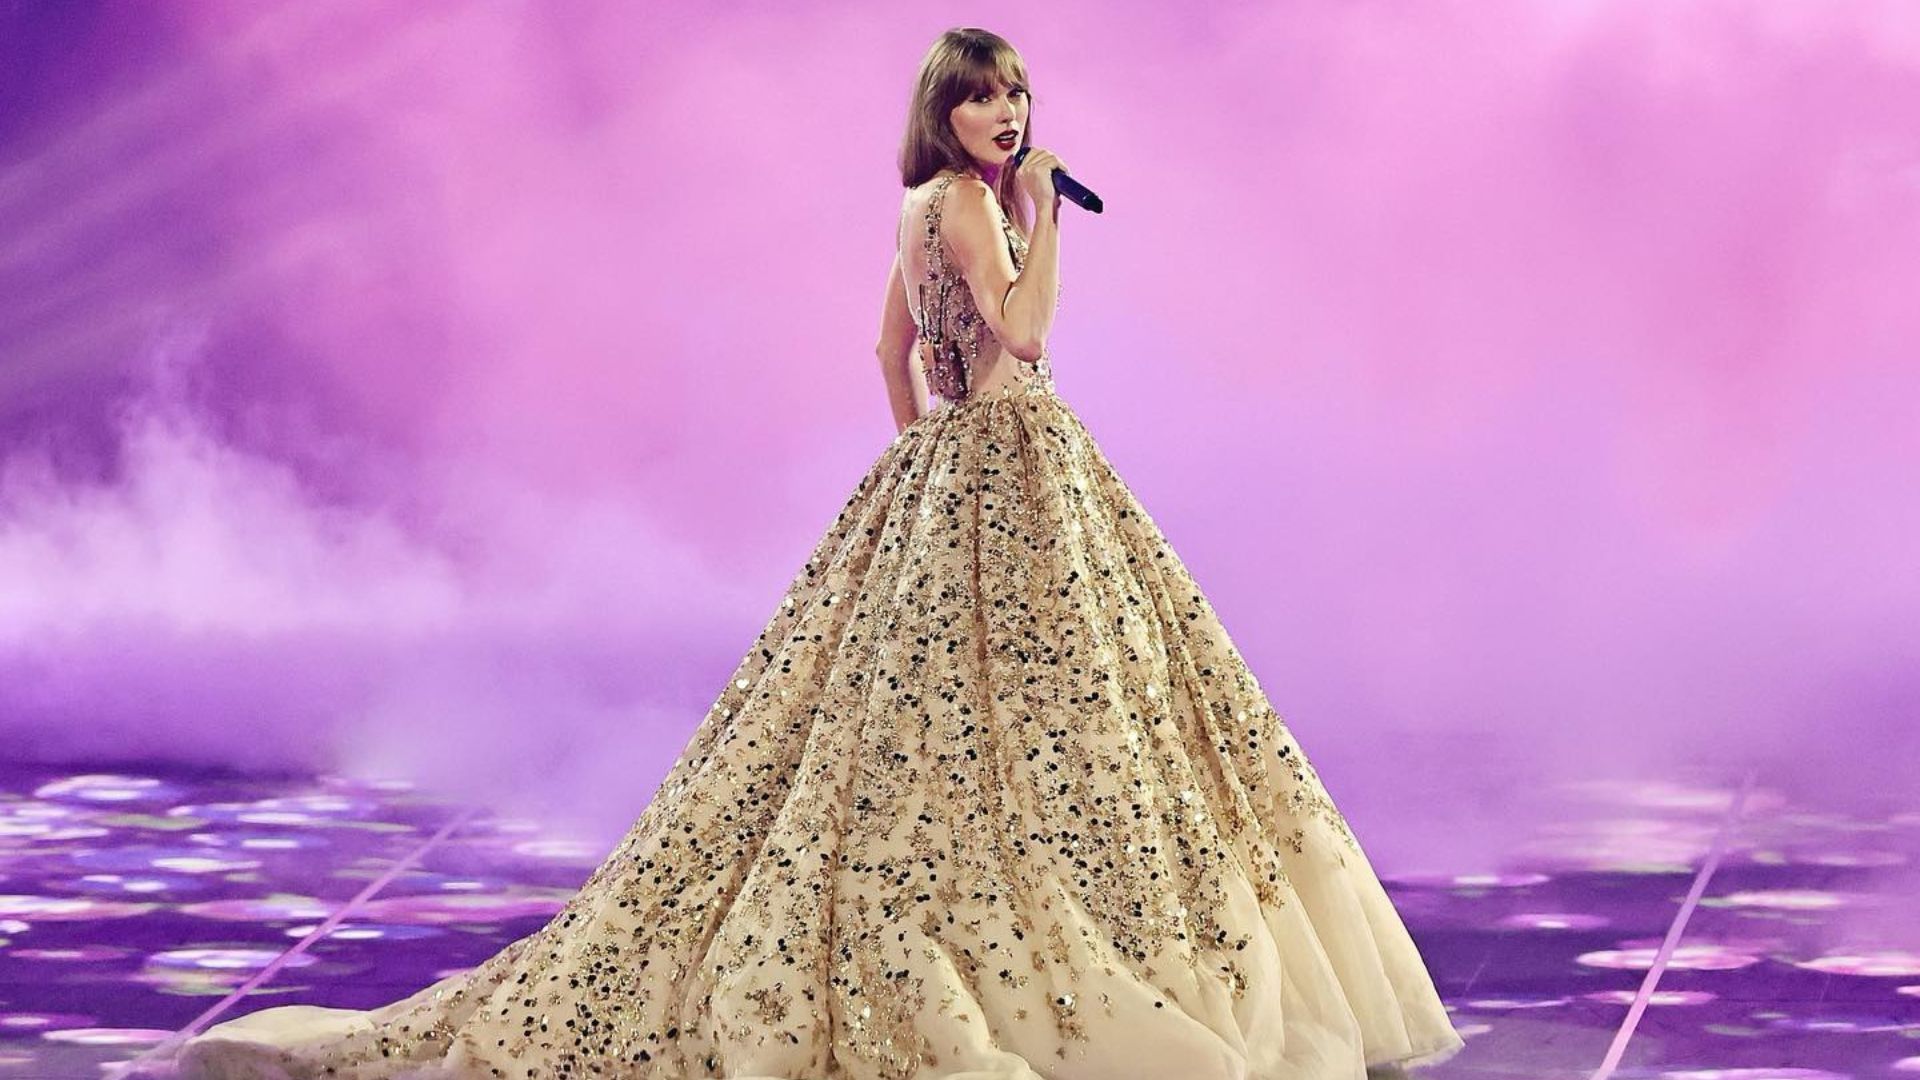 Enchanted ballgown Taylor Swift